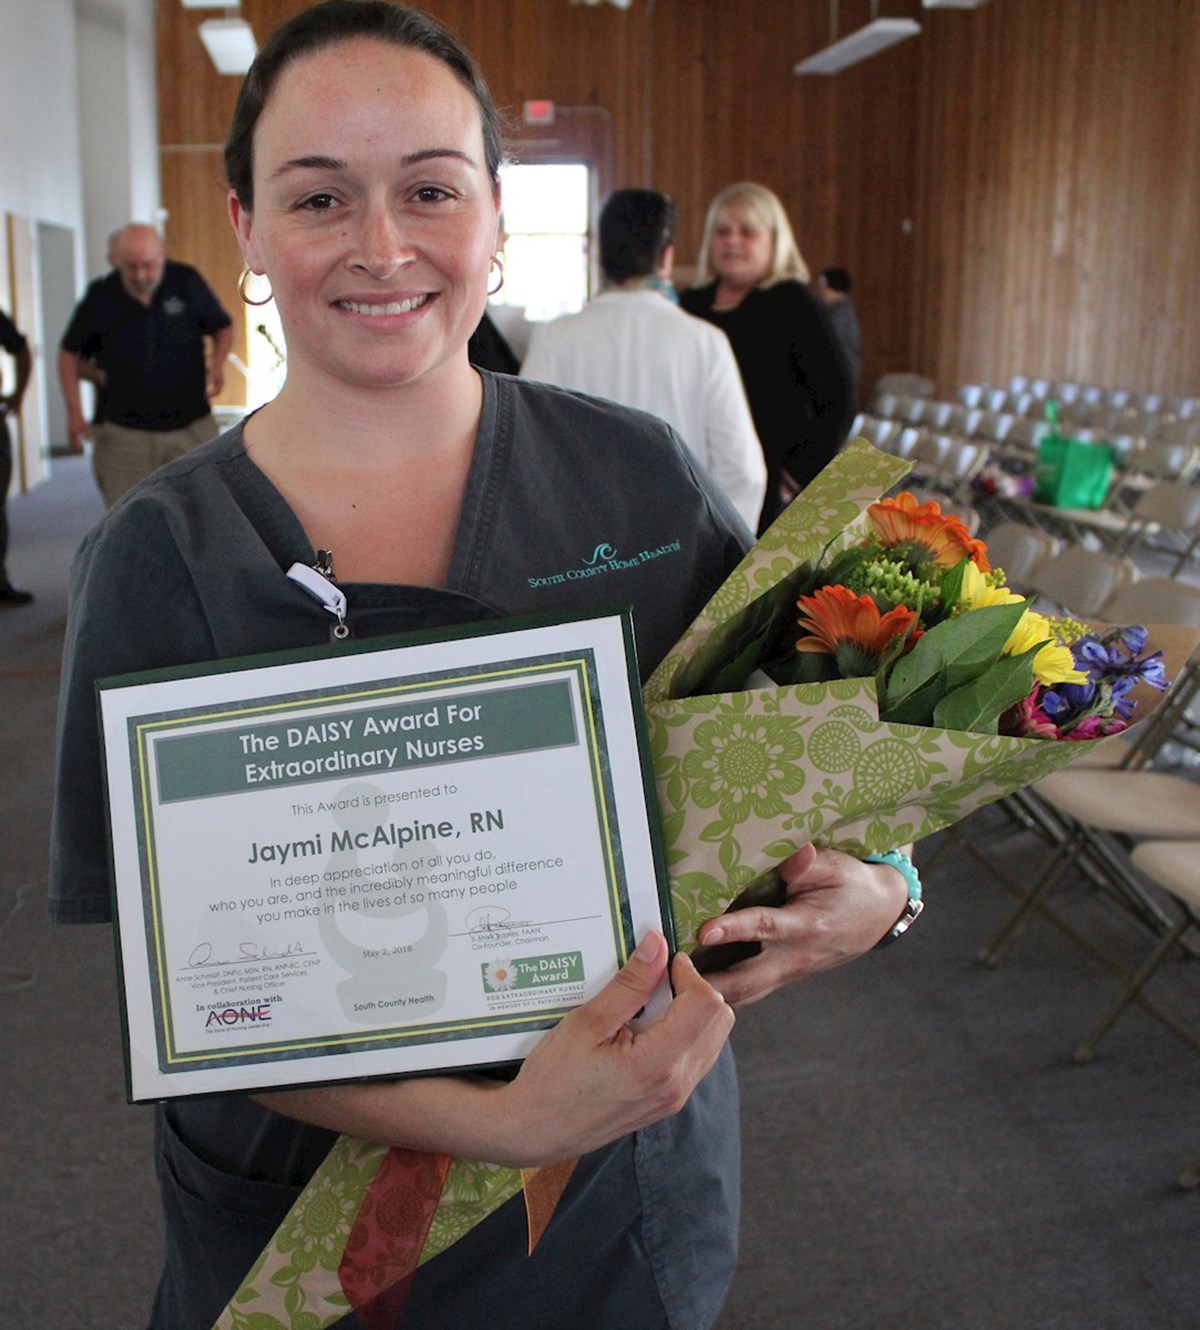 Jaymi McAlpine, BSN: Dedicated nurse, Daisy Award recipient